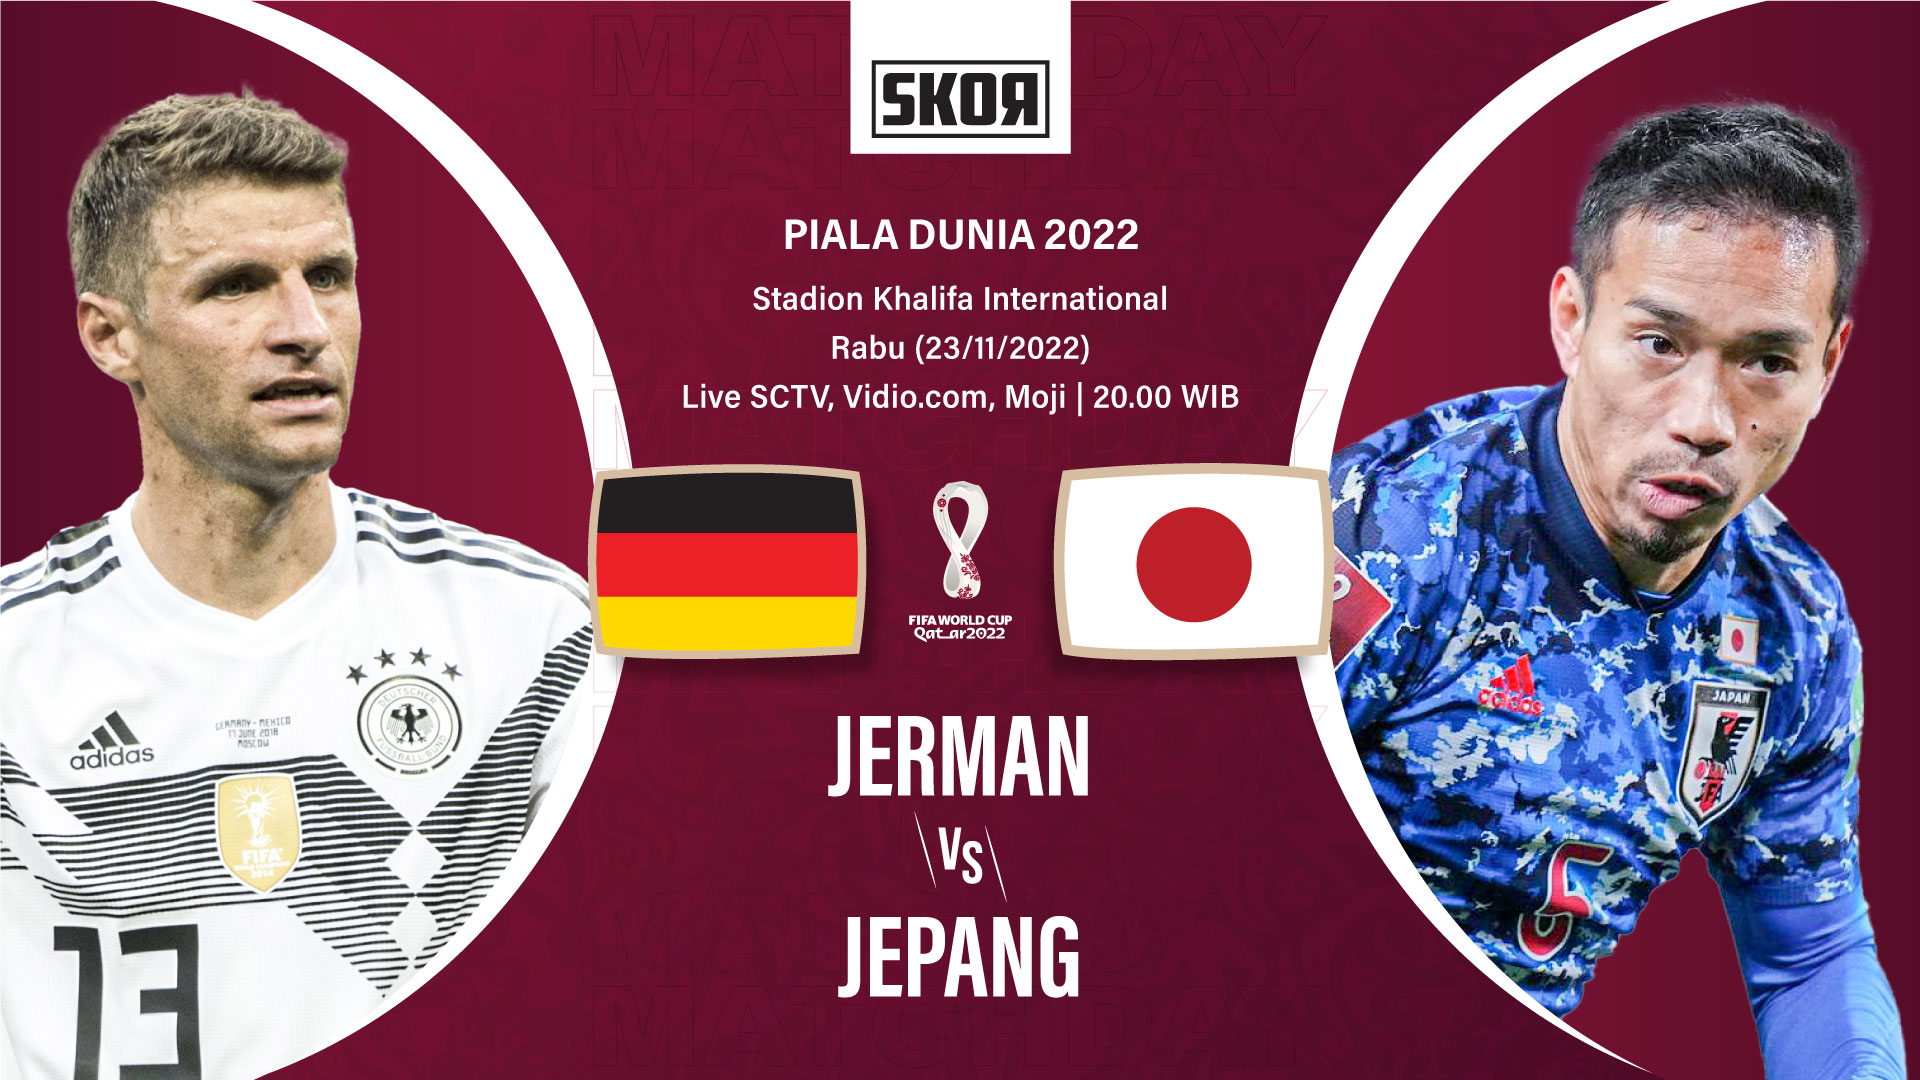 Piala Dunia 2022: 5 Fakta Menarik usai Jerman Kalah 1-2 dari Jepang